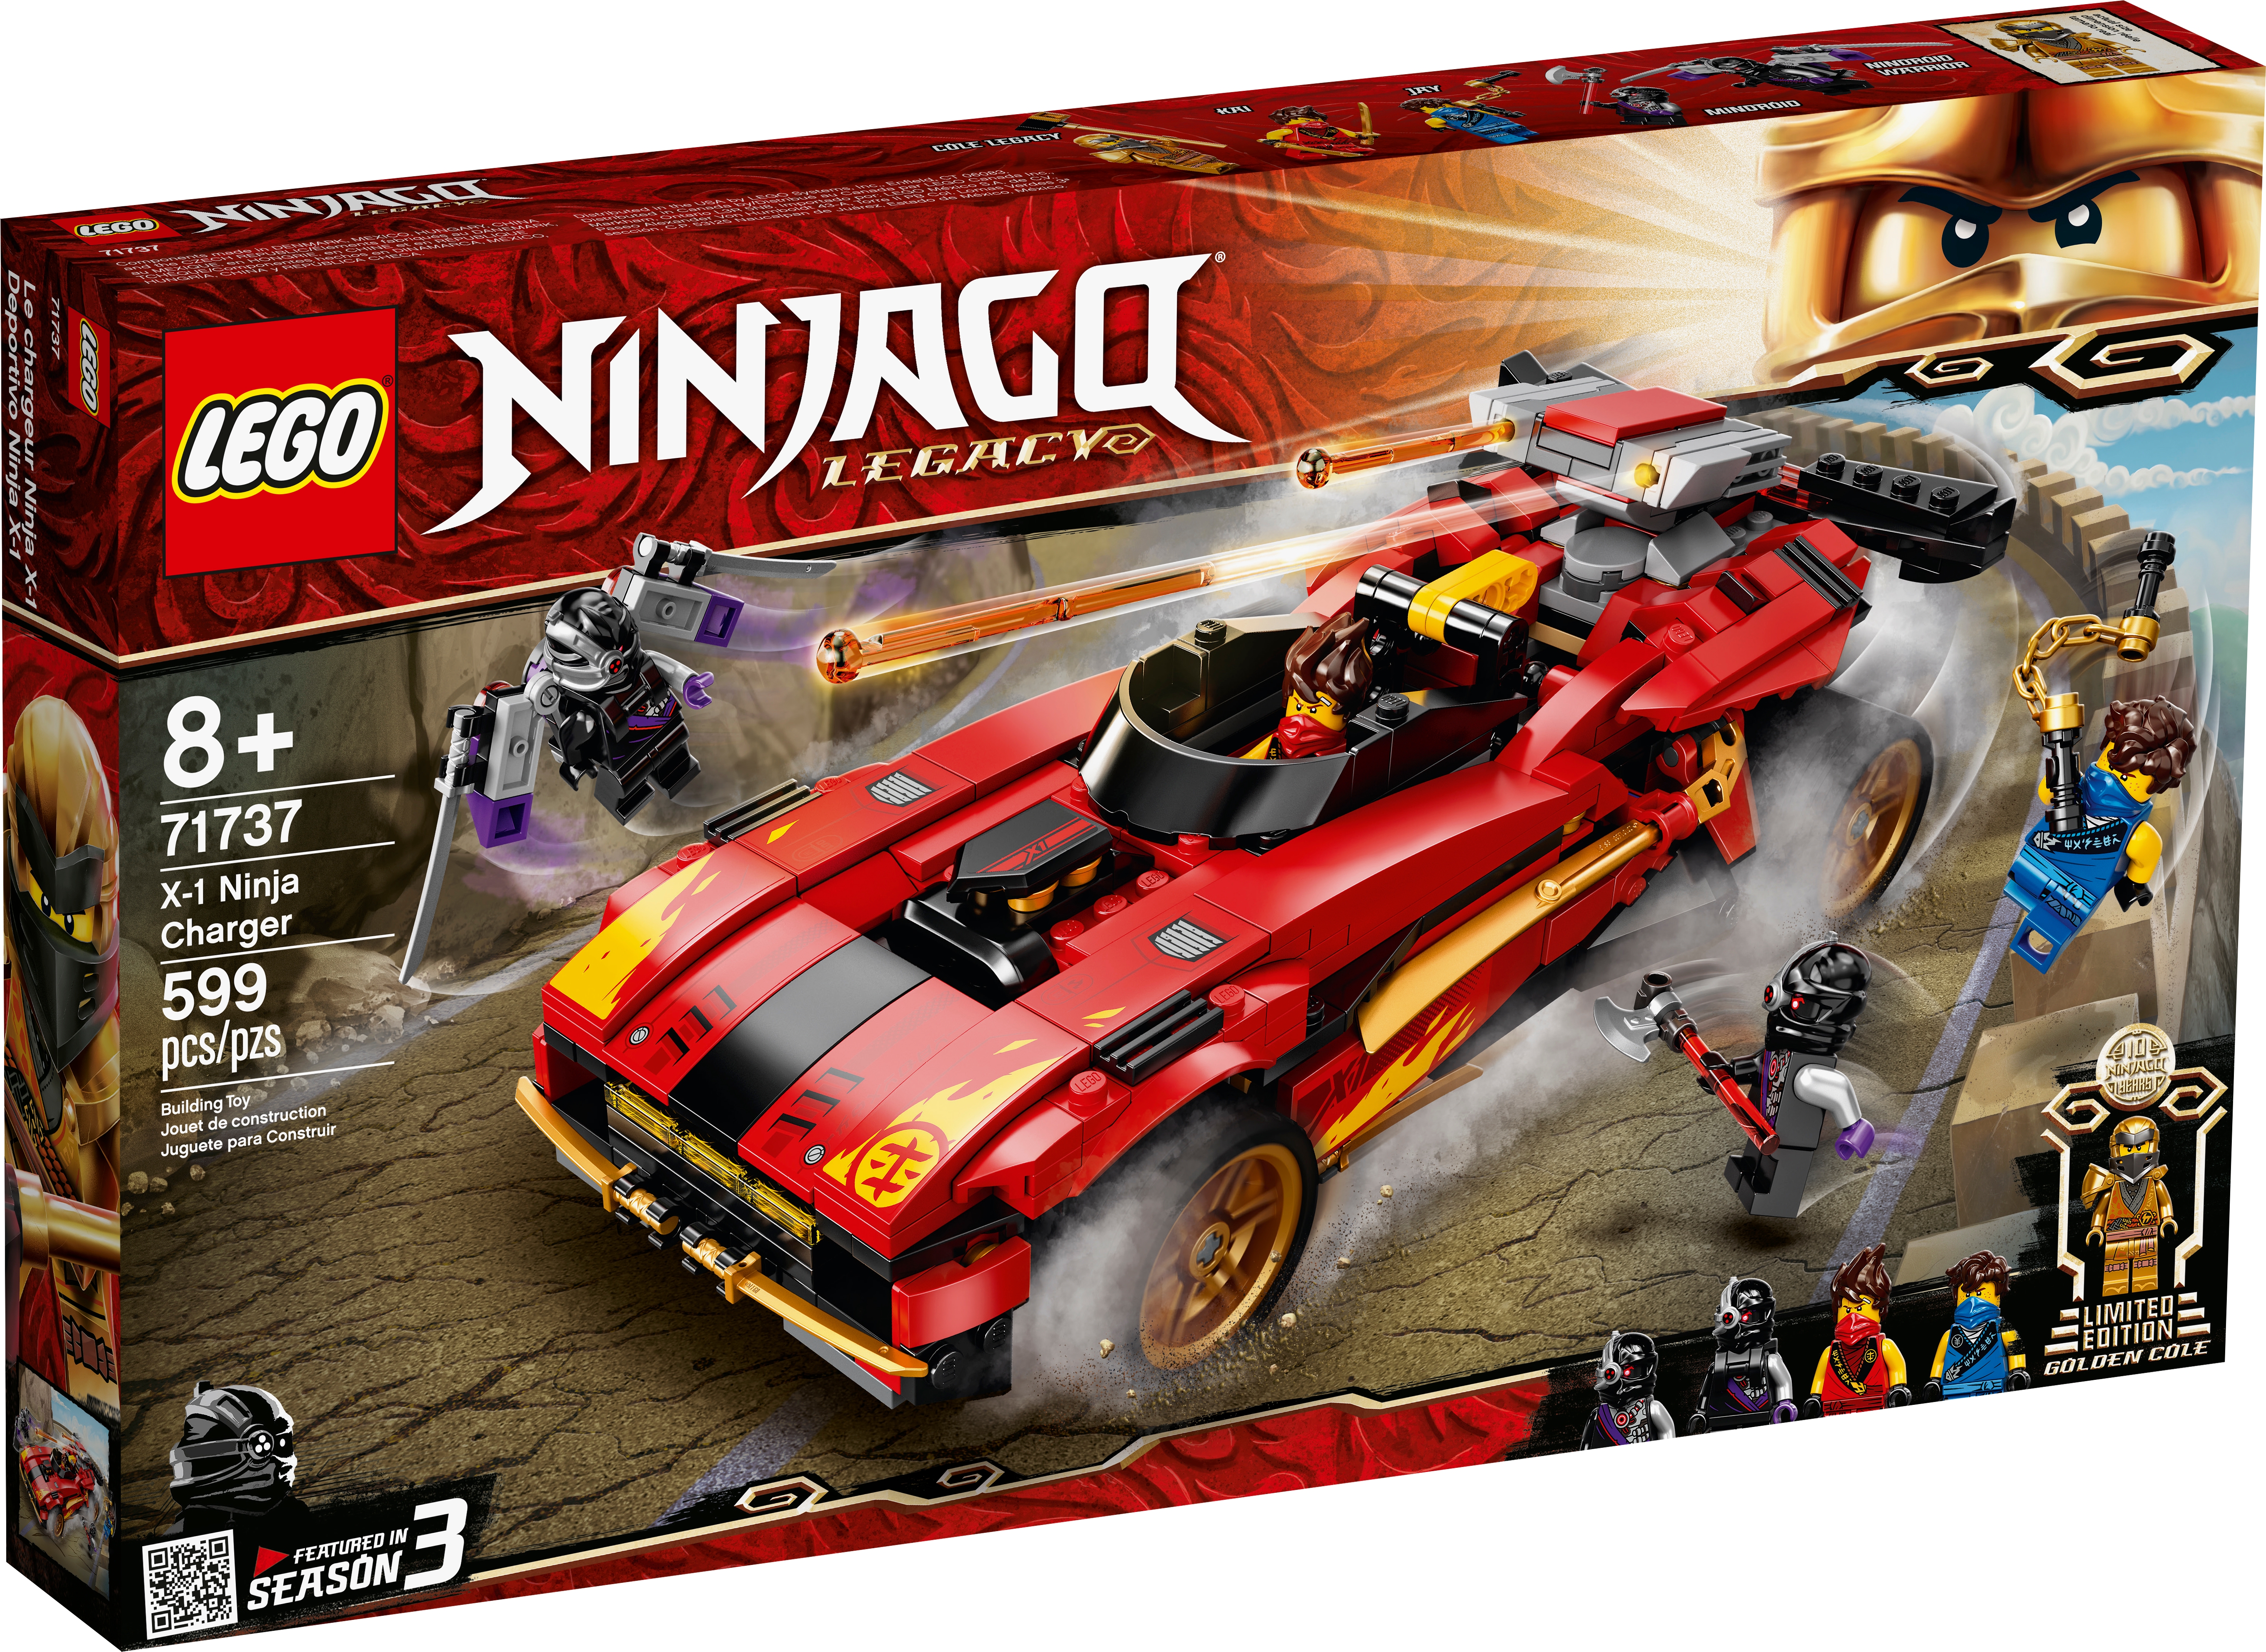 LEGO NINJAGO Legacy X-1 Ninja Charger 71737 Building Kit Playset 599pcs Jan.1,21 